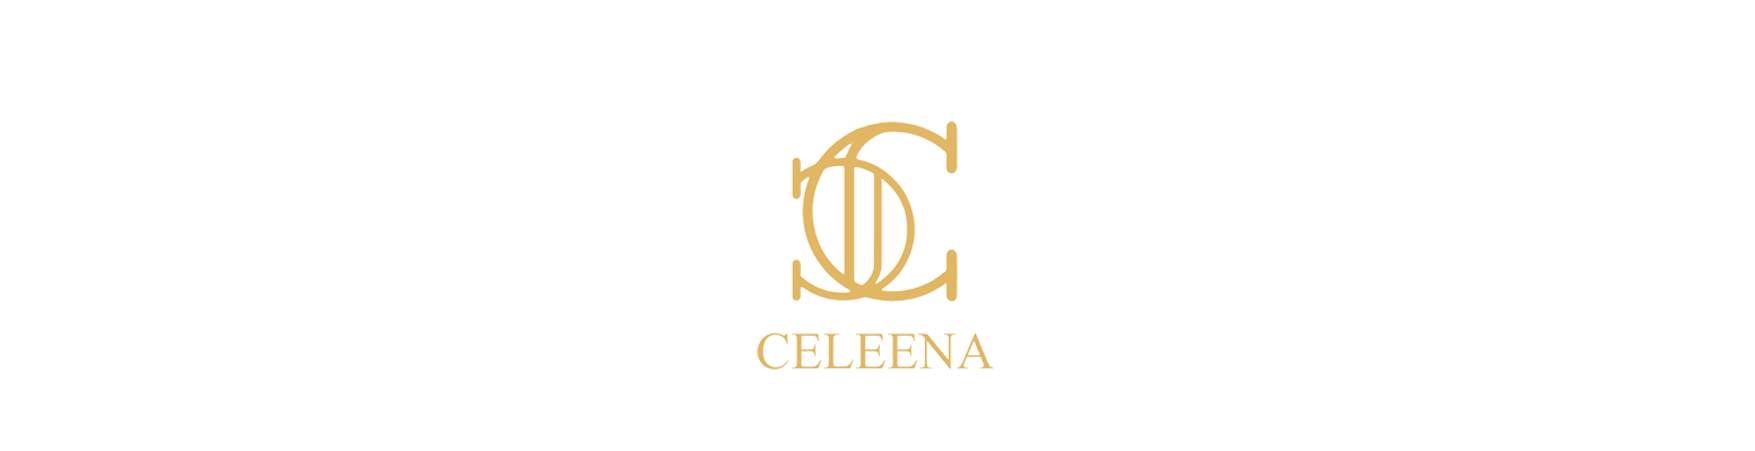 Celeena